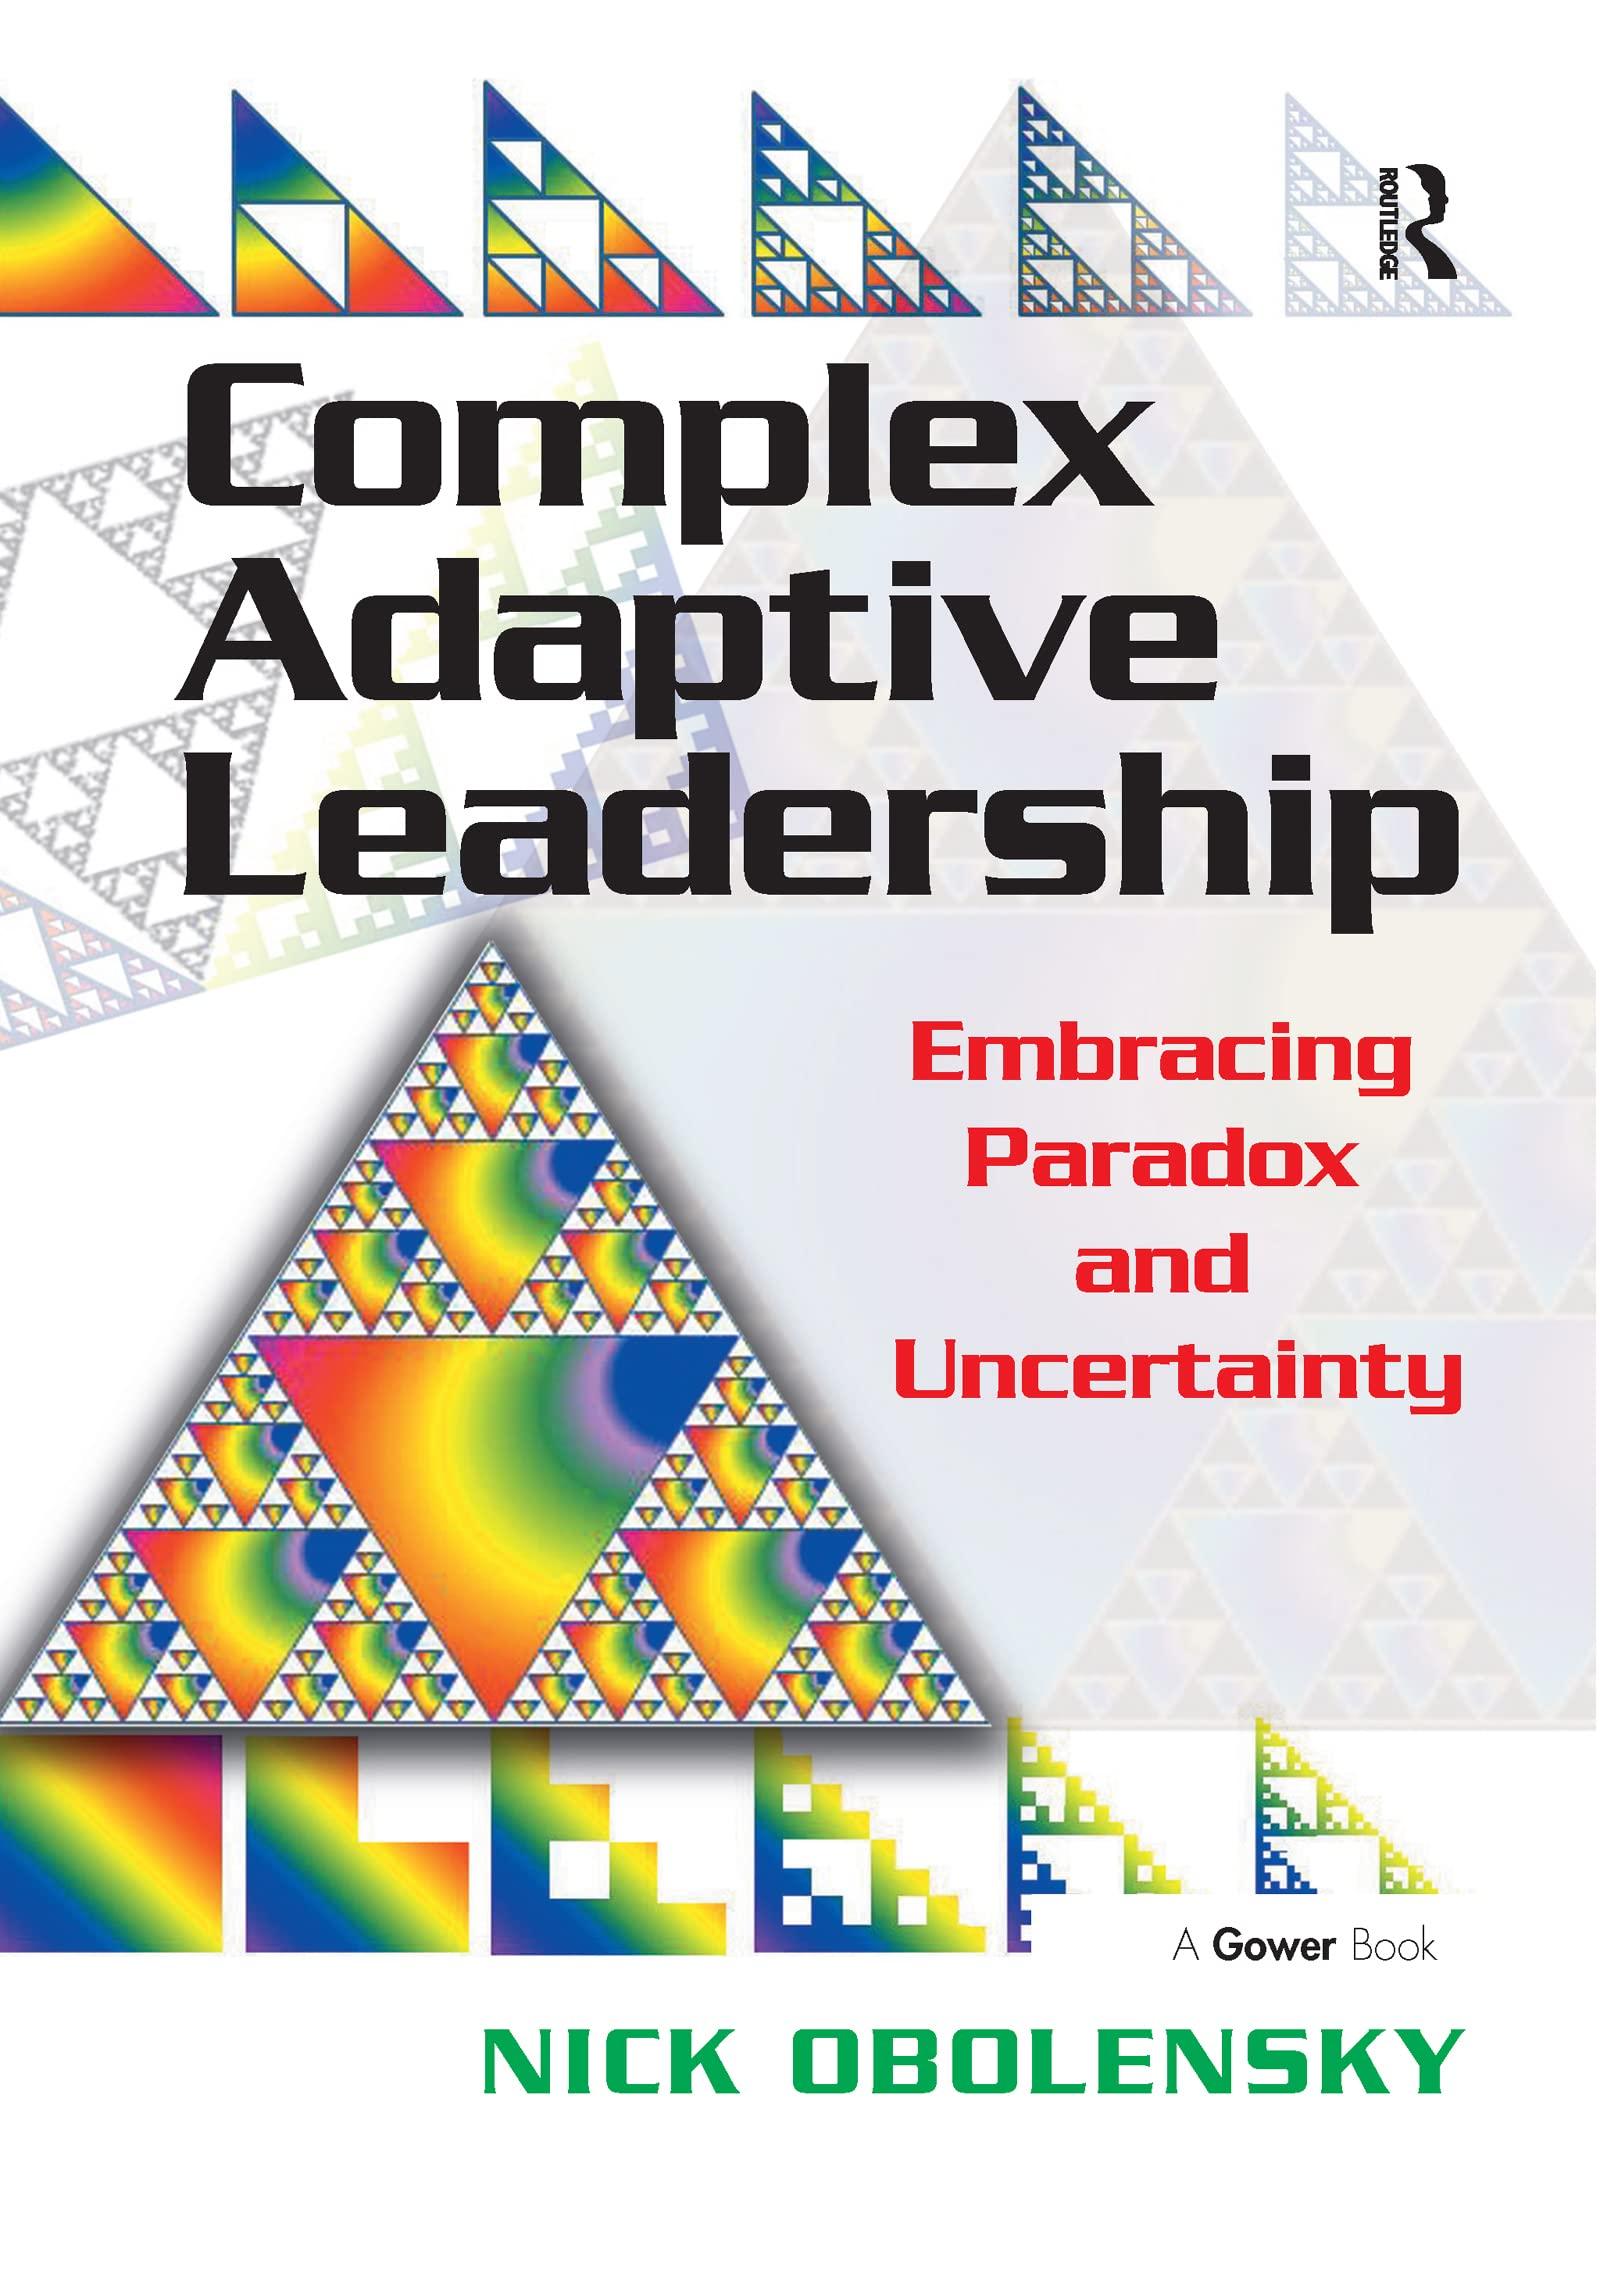 complex adaptive leadership embracing paradox and uncertainty 1st edition nick obolensky 1138256285,